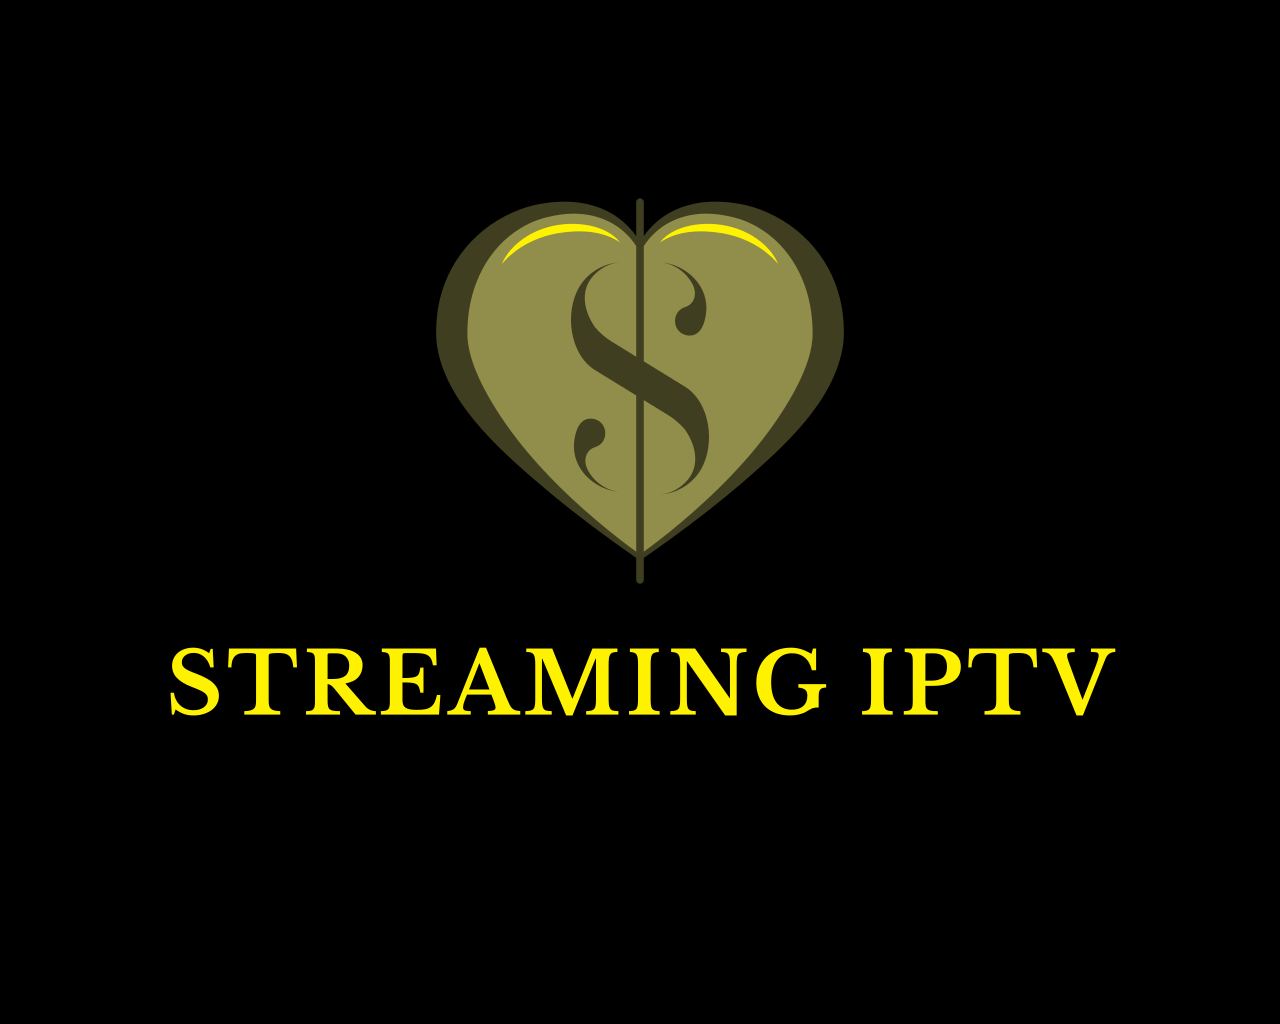 LOVE STREAMING IPTV